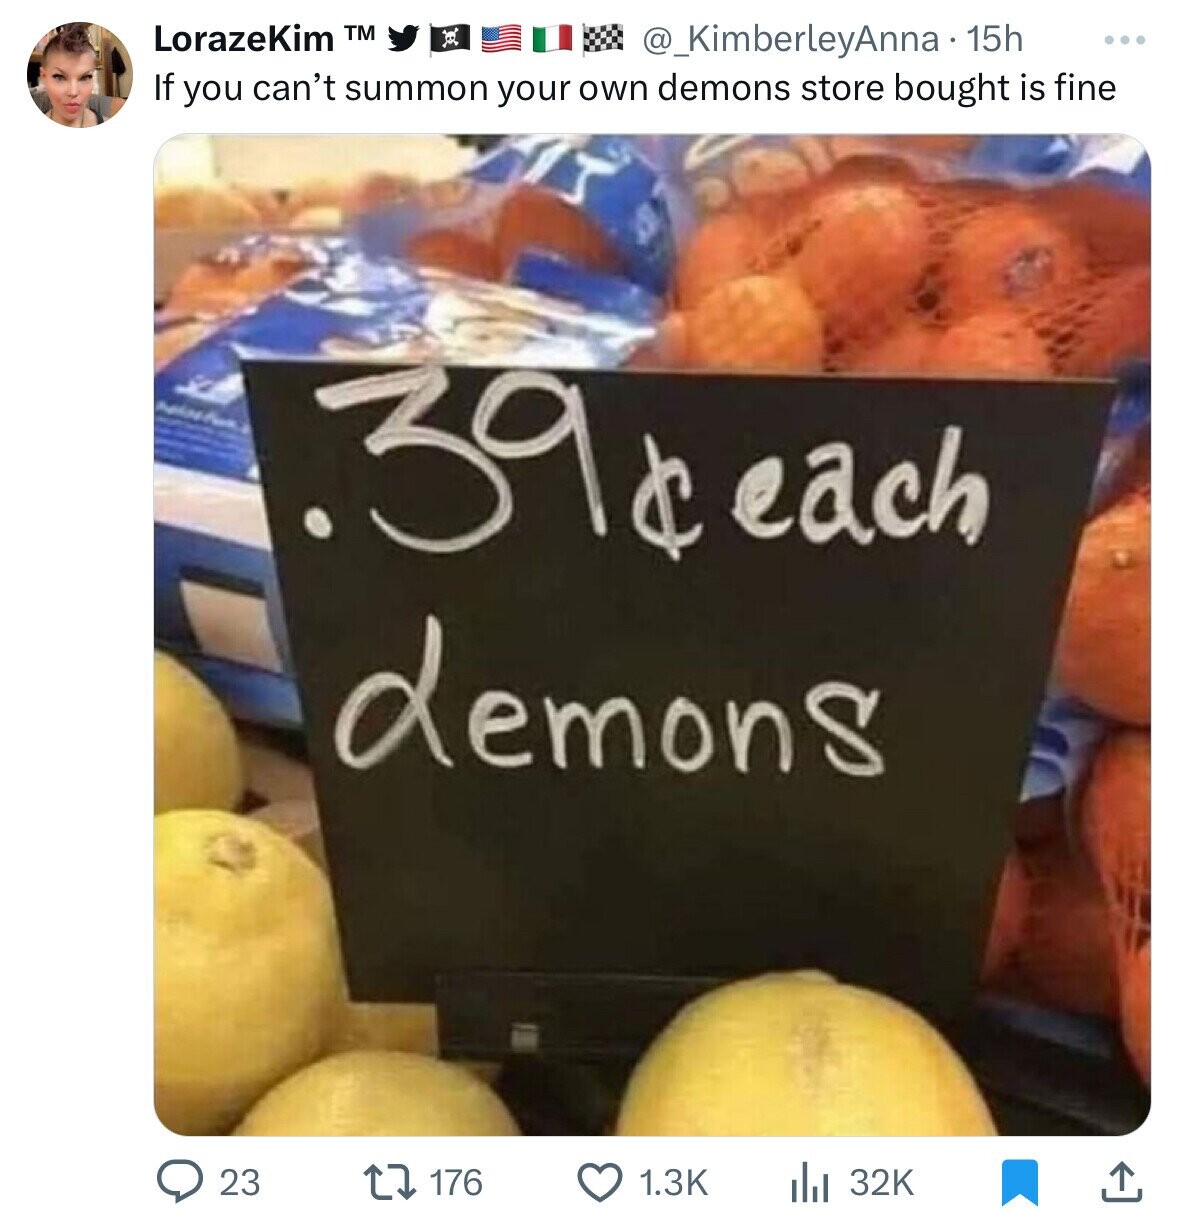 lemons demons meme - LorazeKim T 15h If you can't summon your own demons store bought is fine 39each demons 23 176 Ill 32K